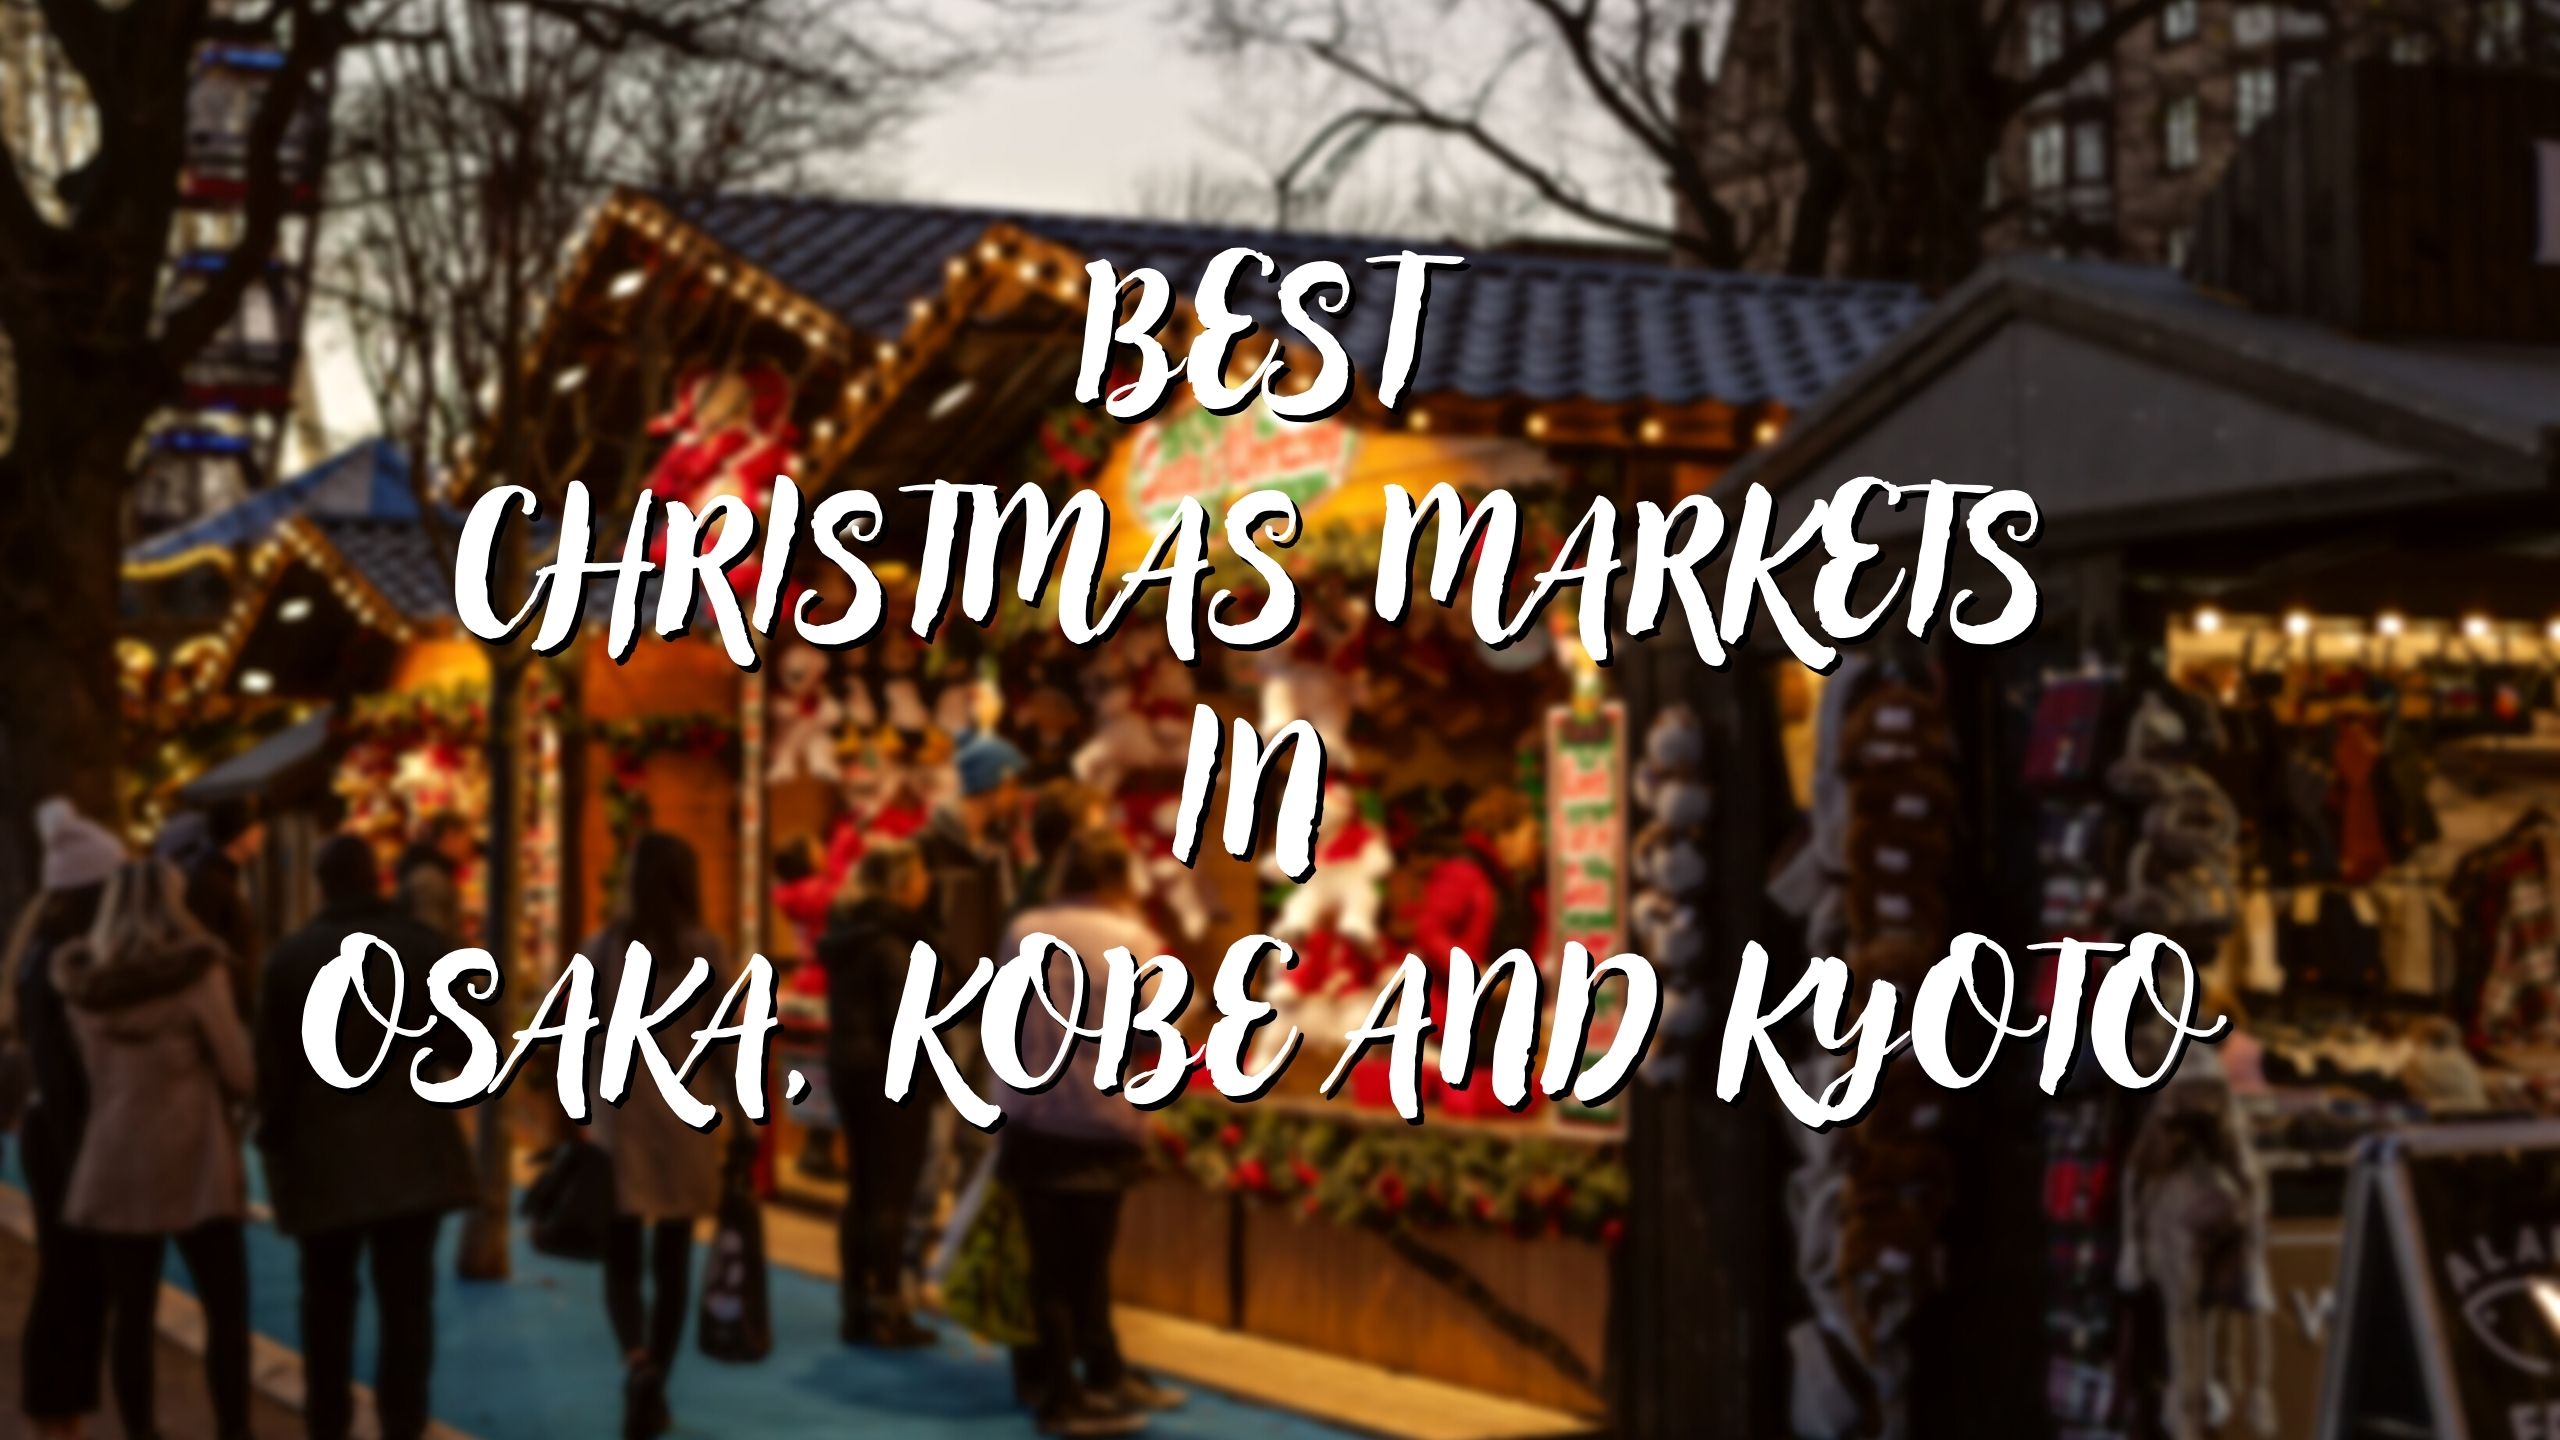 Best Christmas Markets In Osaka, Kobe And Kyoto - Japan Web Magazine